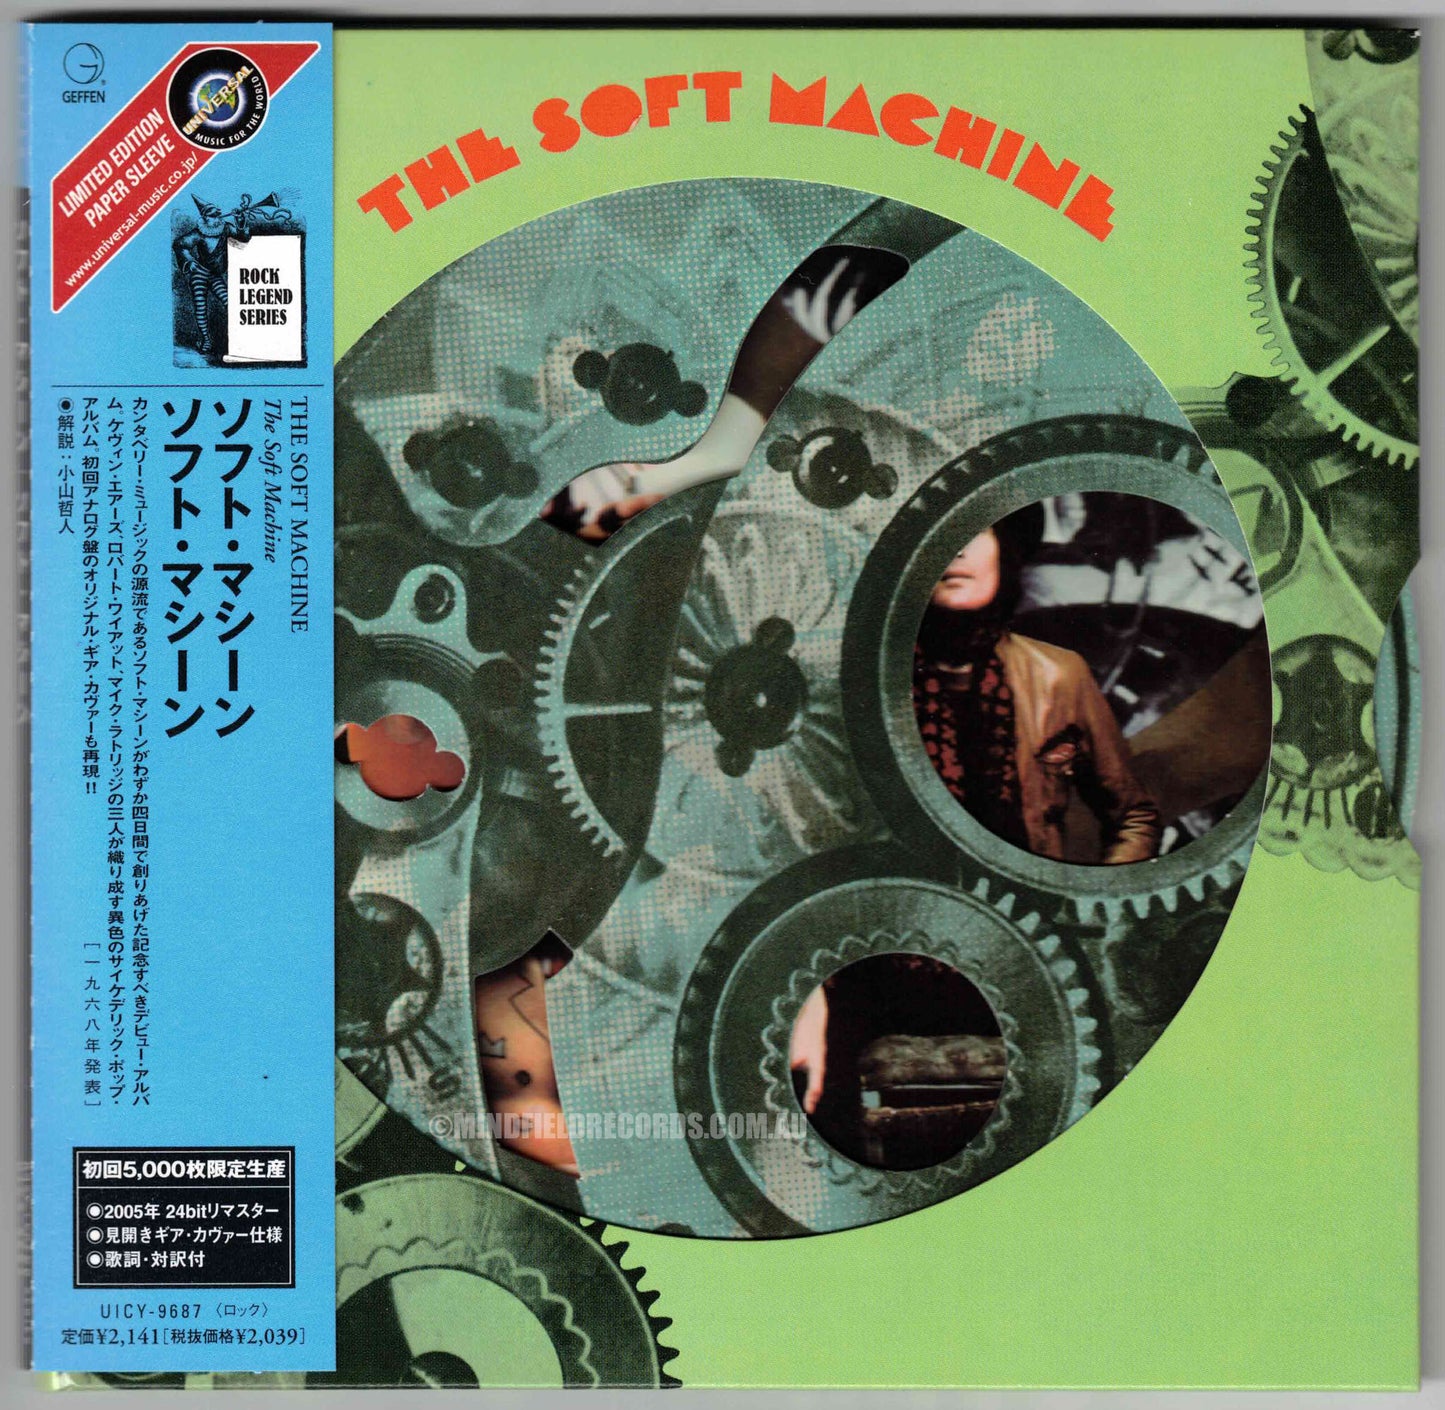 The Soft Machine ‎– The Soft Machine